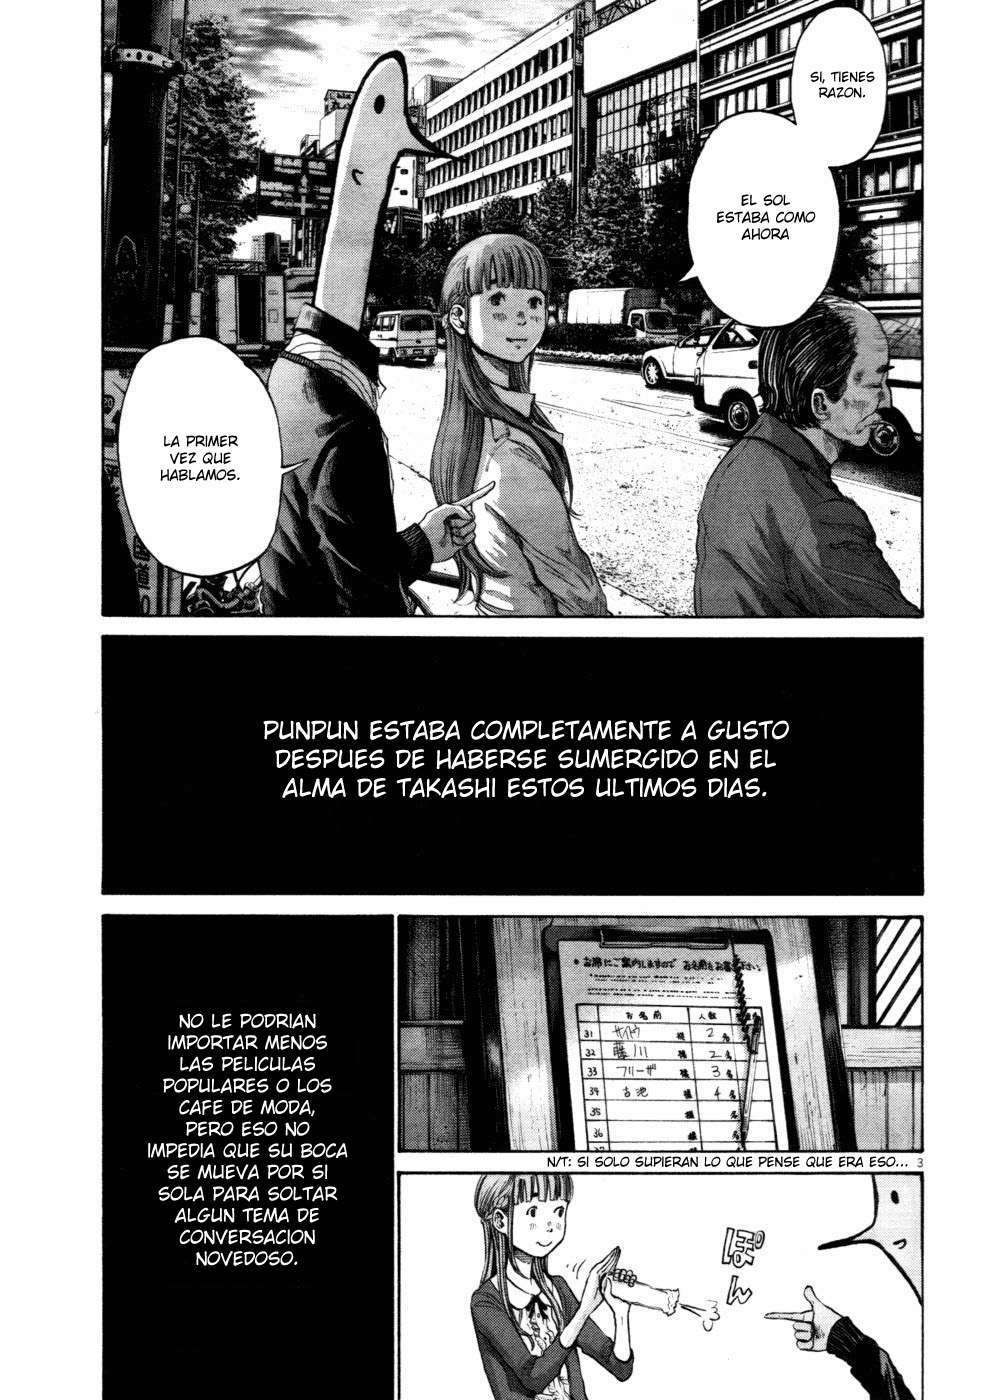 Leer Manga Oyasumi Punpun Capítulo 103 En Línea Leer Manga En Línea Gratis 